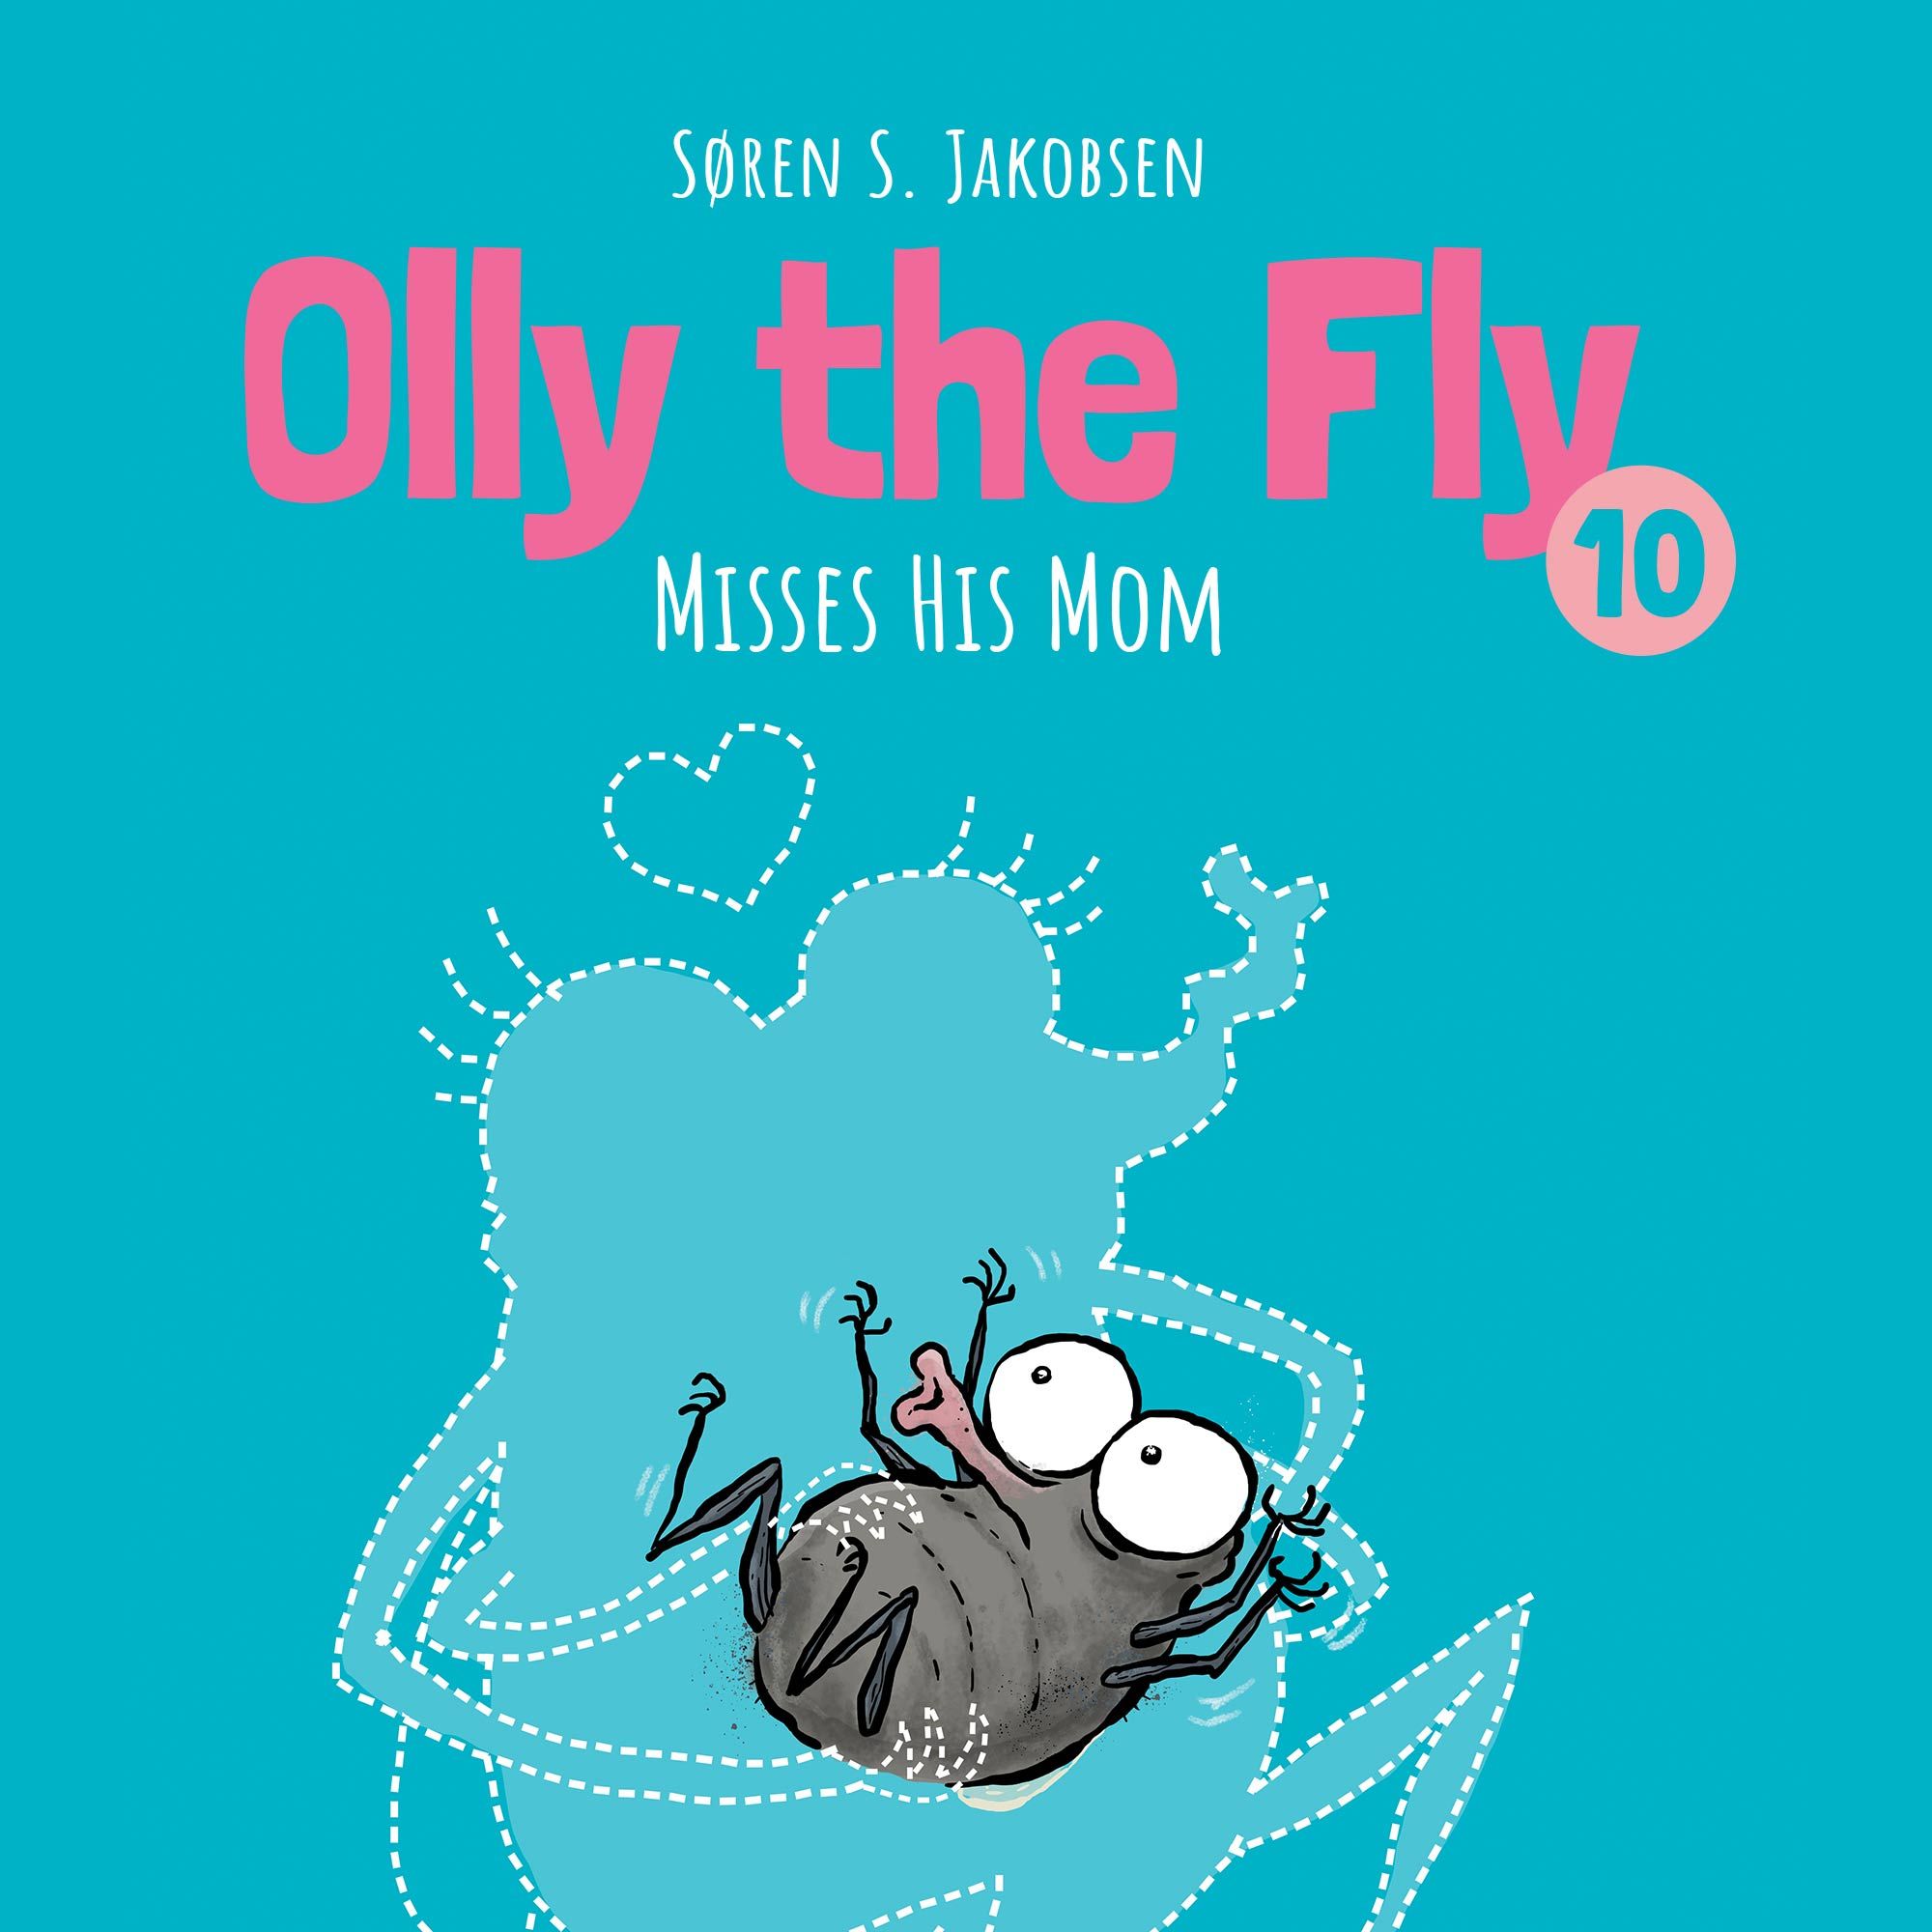 Olly the Fly #10: Olly the Fly Misses His Mom, ljudbok av Søren S. Jakobsen